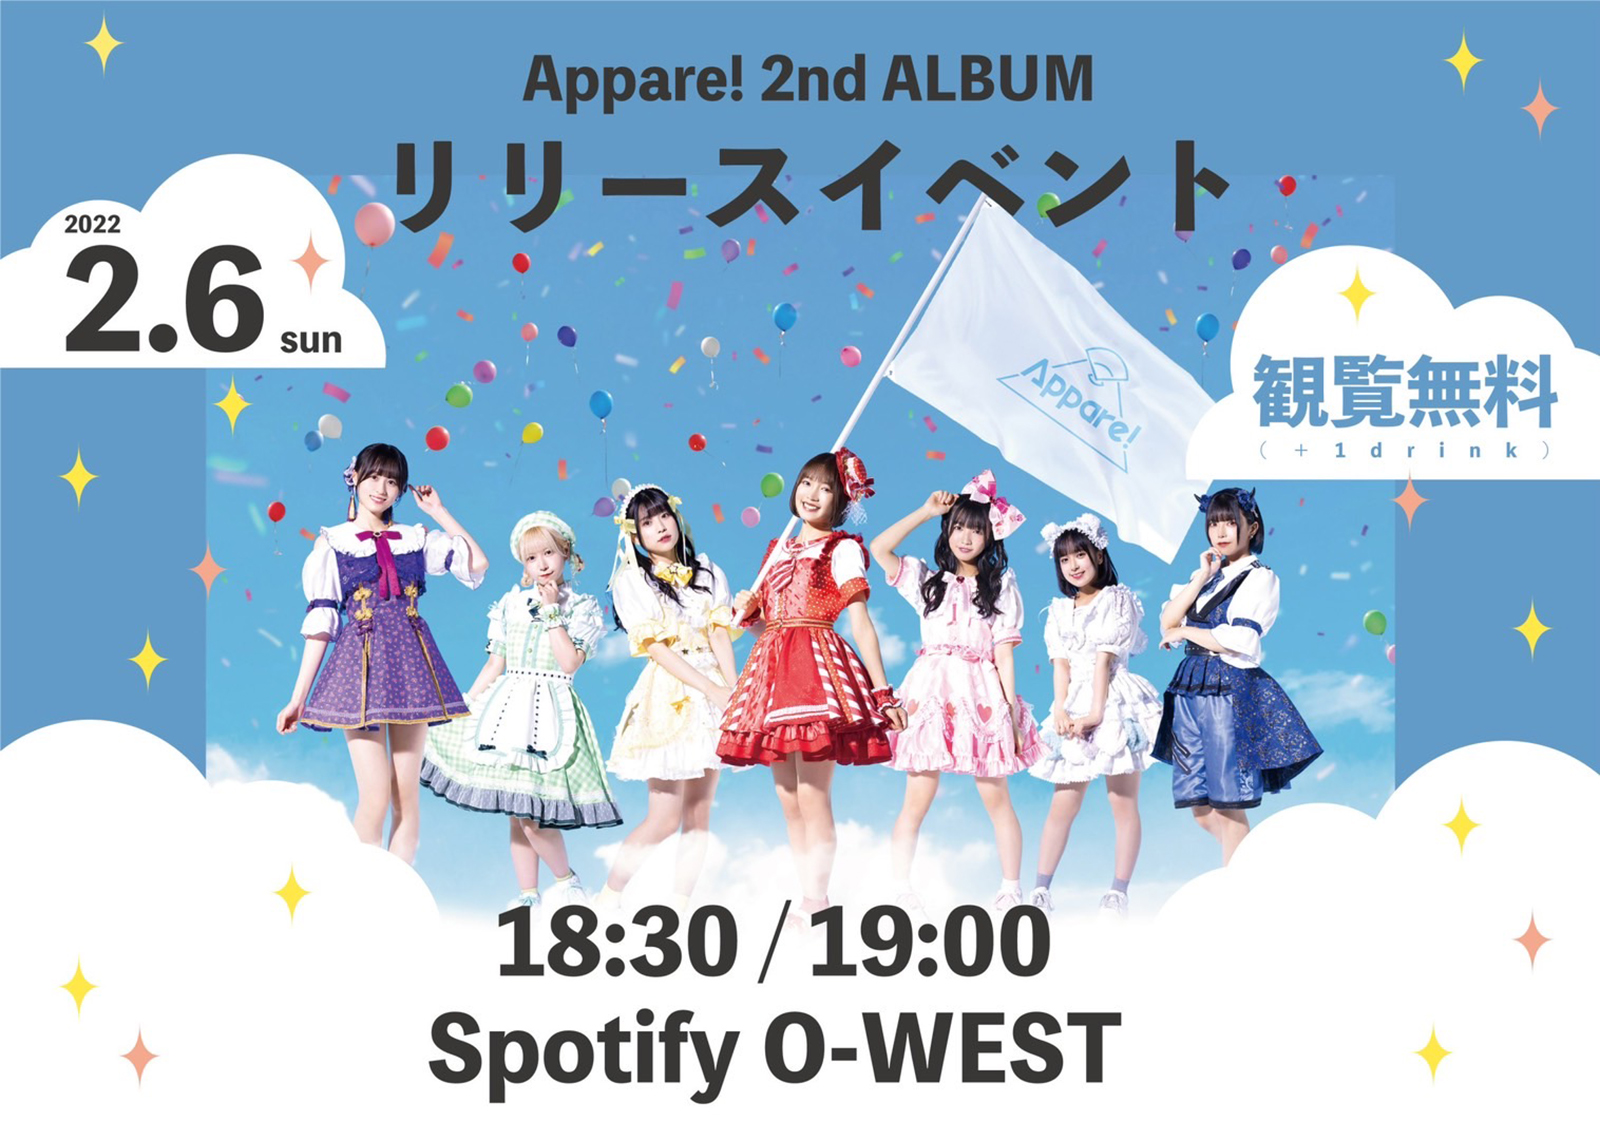 Appare! 2nd ALBUMリリースイベント